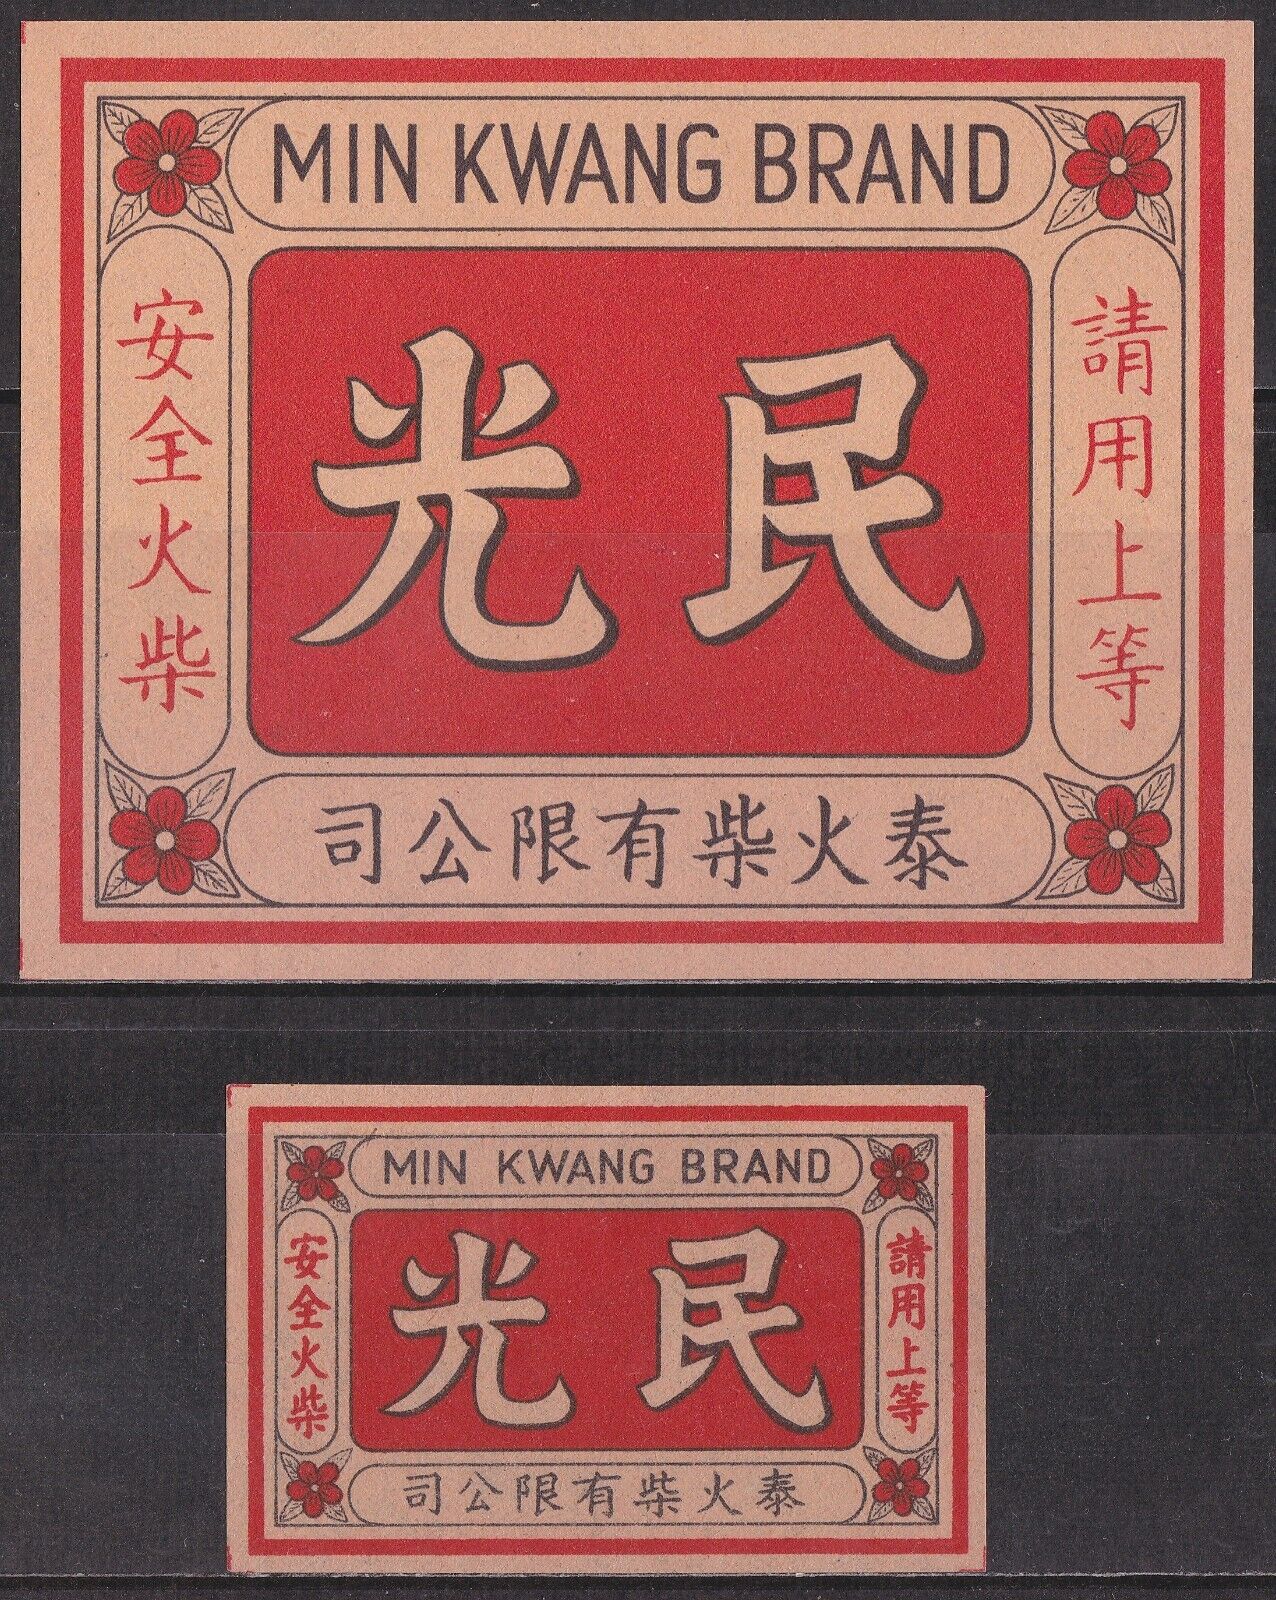 Old matchbox label Thailand, Min Kwang Brand, 泰火柴有限公司 Thai Match Co., Ltd.